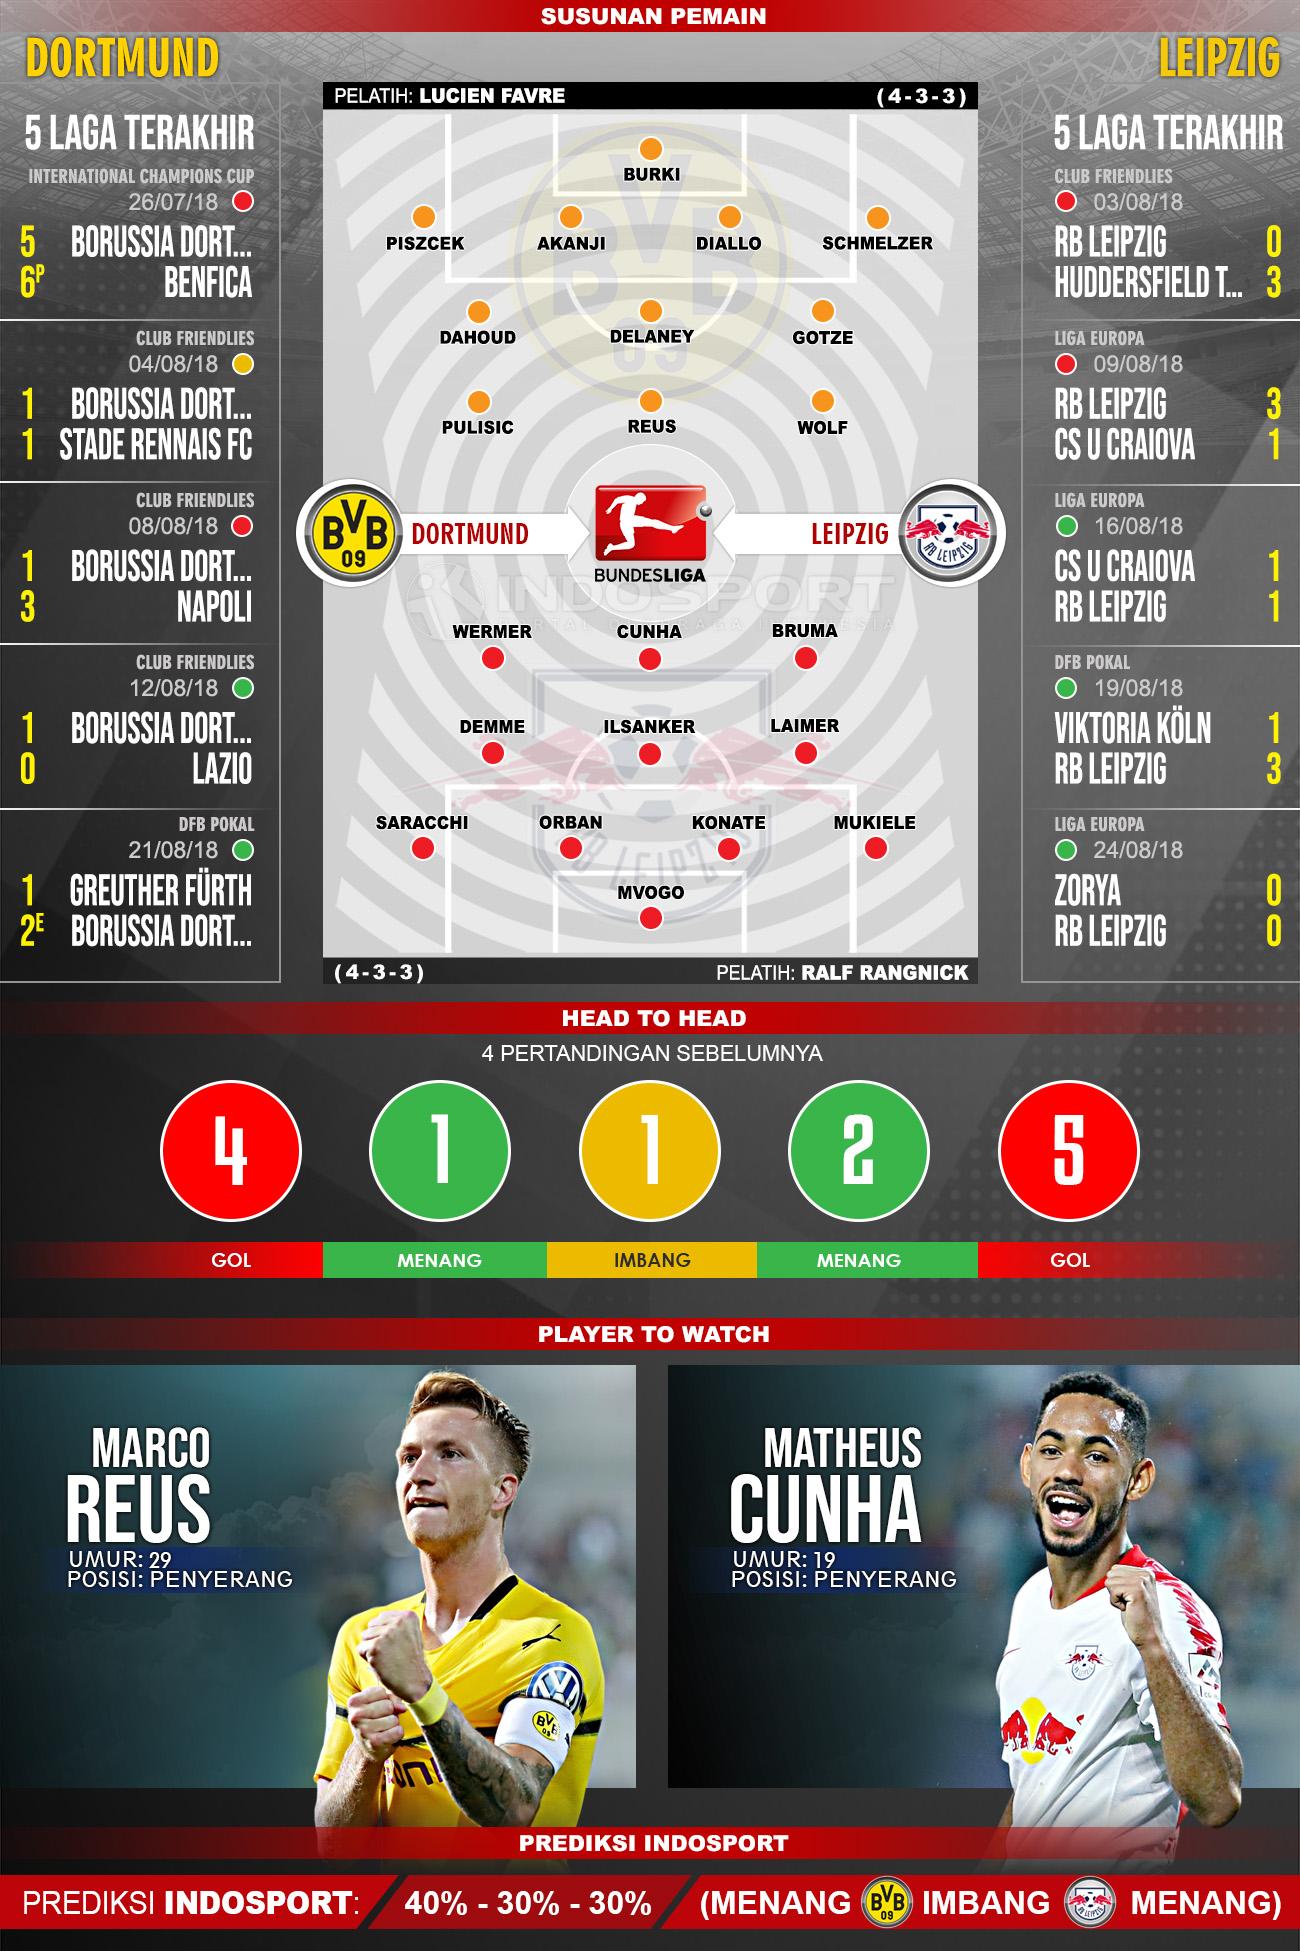 Borussia Dortmund vs RB Leipzig (Susunan Pemain - Lima Laga Terakhir - Player to Watch - Prediksi Indosport) Copyright: Indosport.com